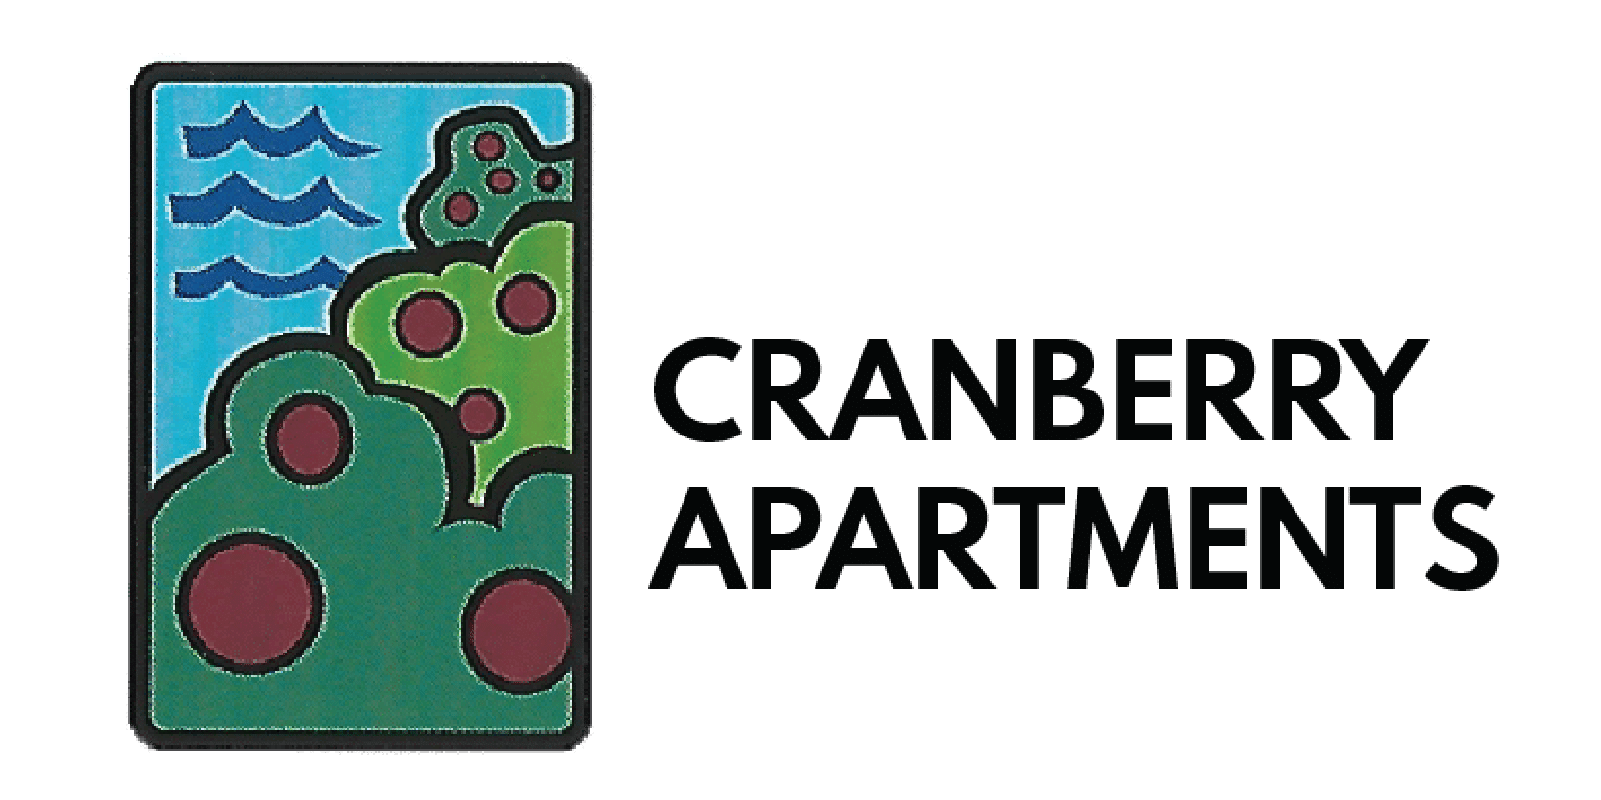 page 1 club, the gratzi, cranberry apartments